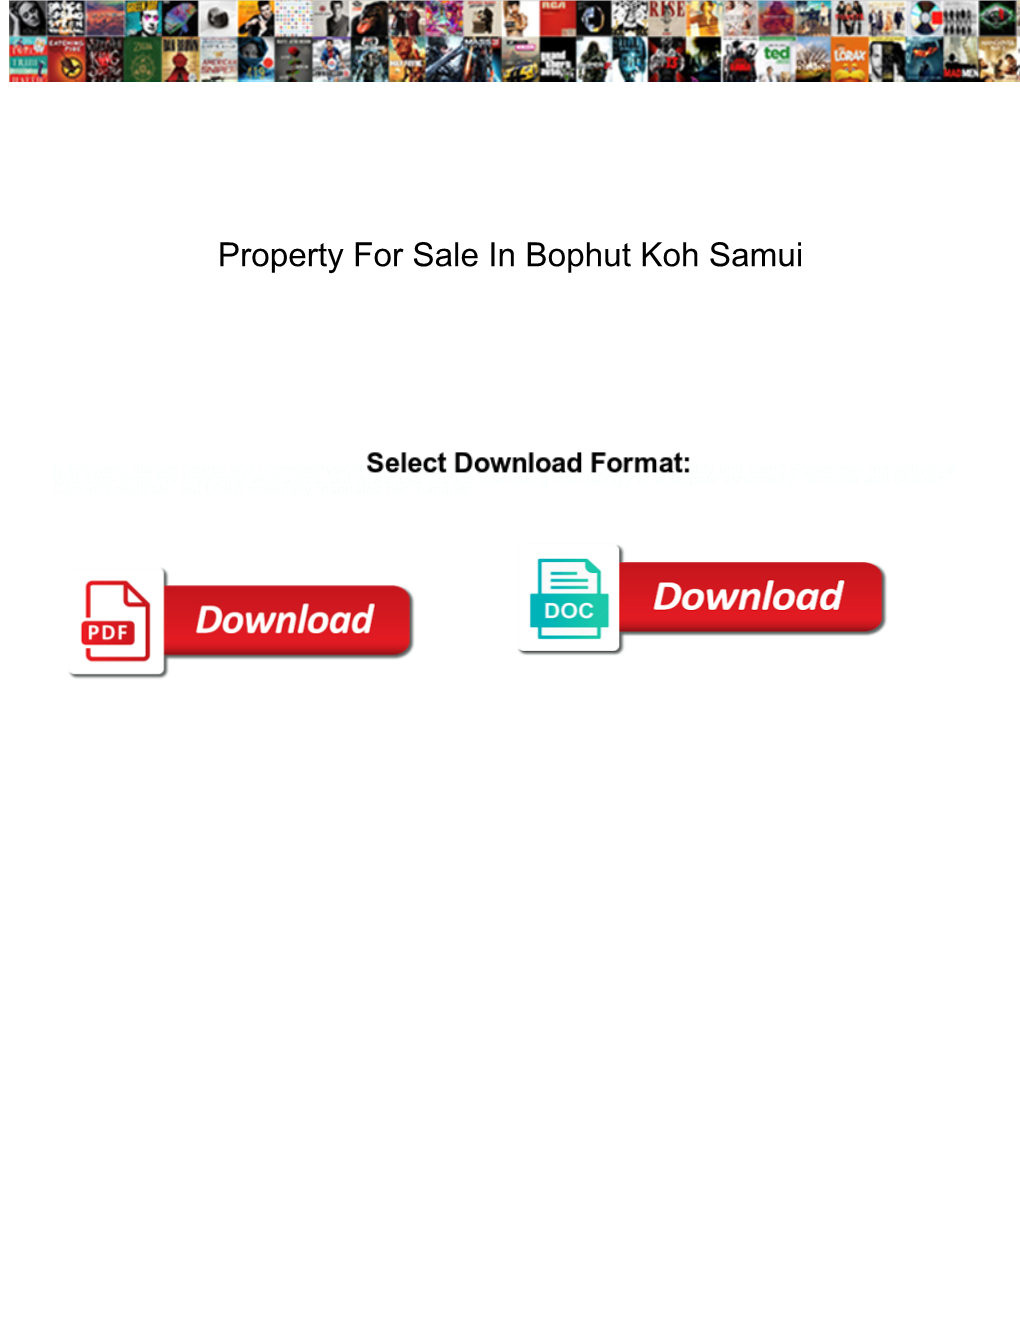 Property for Sale in Bophut Koh Samui